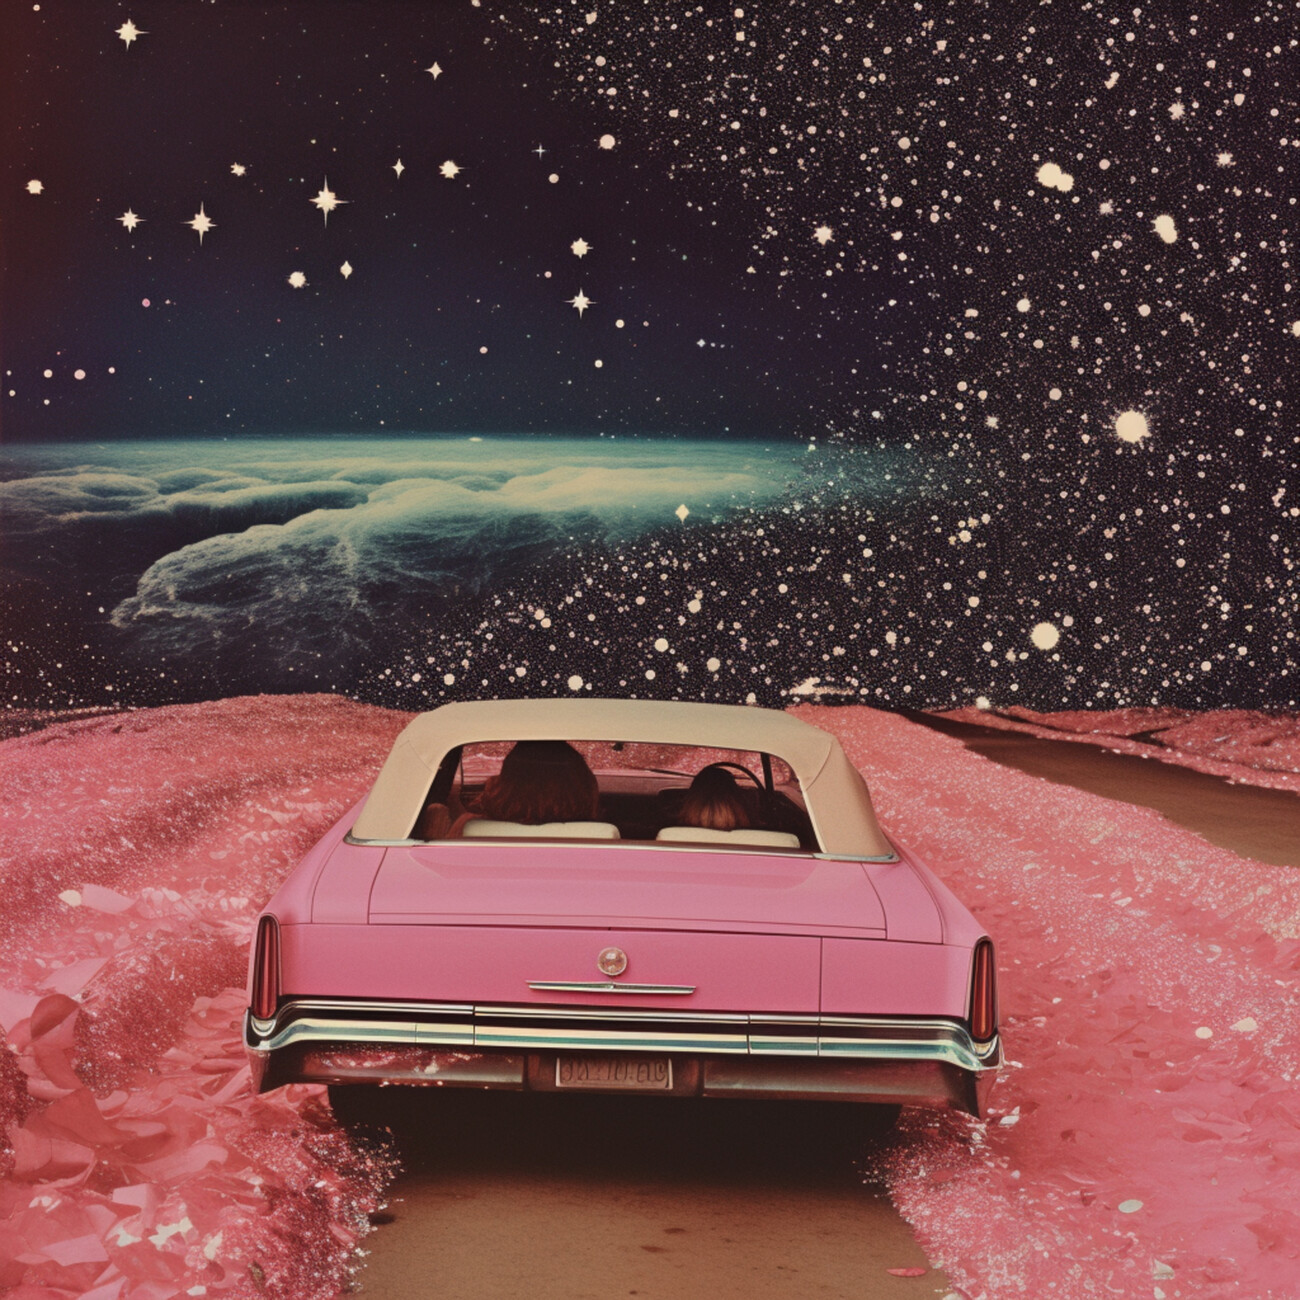 Samantha Hearn Ilustrace Pink Cruise in Space Collage Art, Samantha Hearn, (40 x 40 cm)